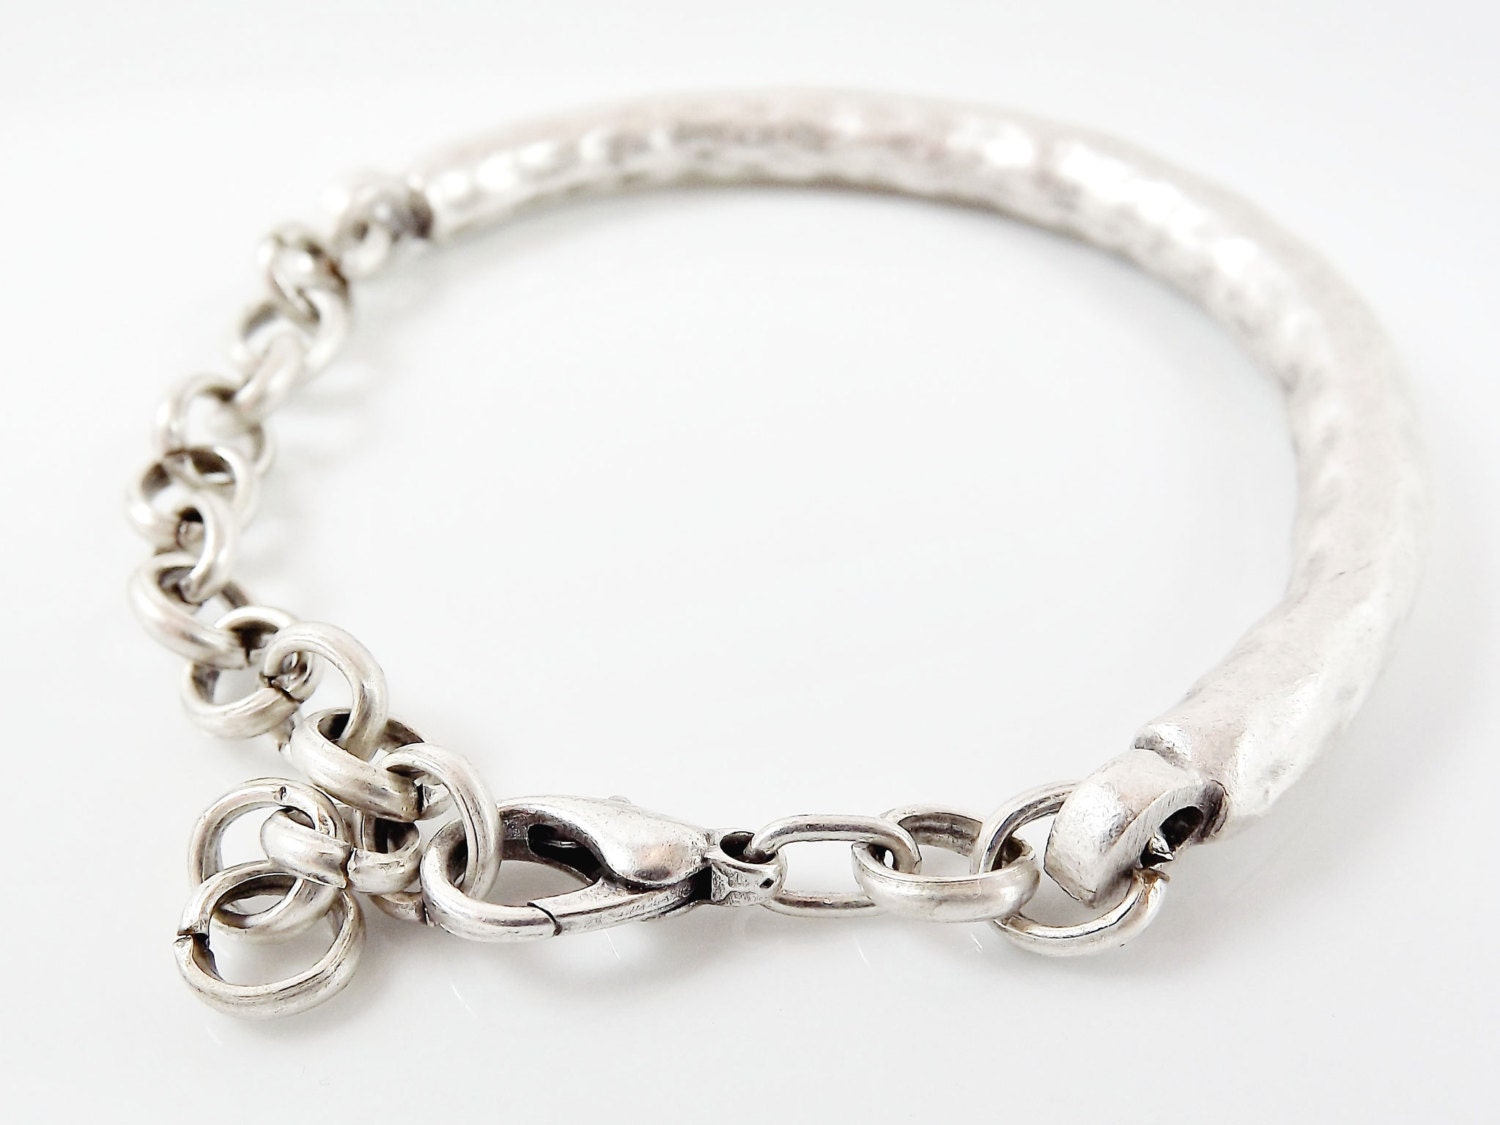 Organic Textured Bar Bracelet with Links & Lobster Clasp - Matte Silver Plated - LylaSupplies